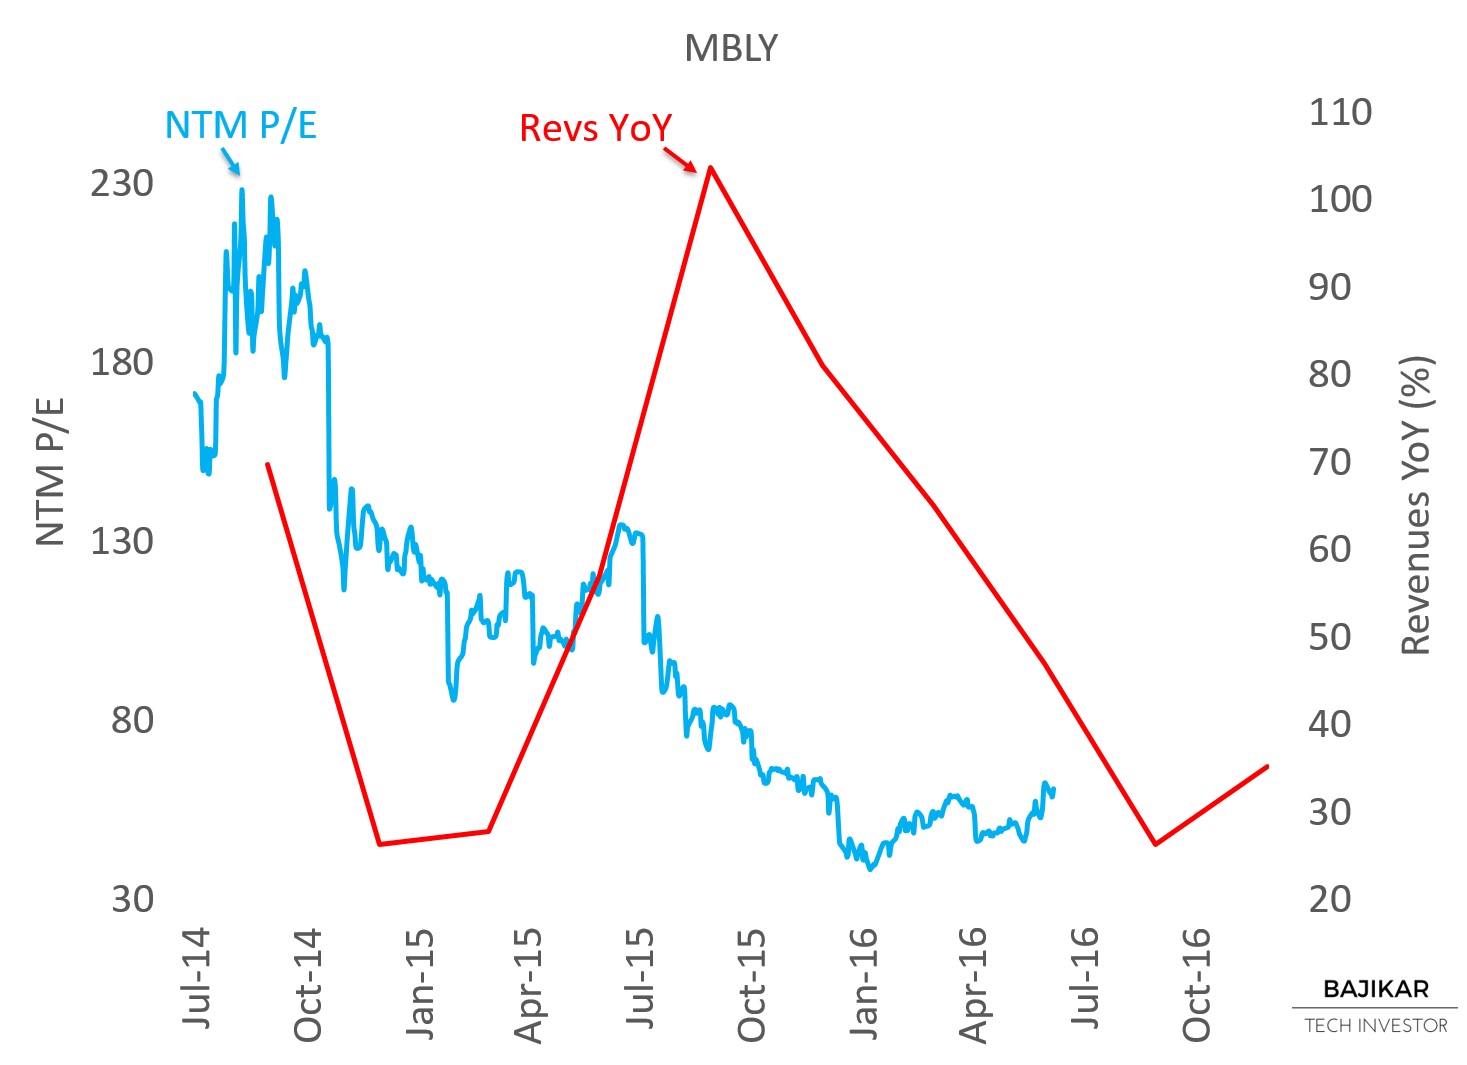 MBLY P/E NTM vs. Revenues YoY 07/14/2016